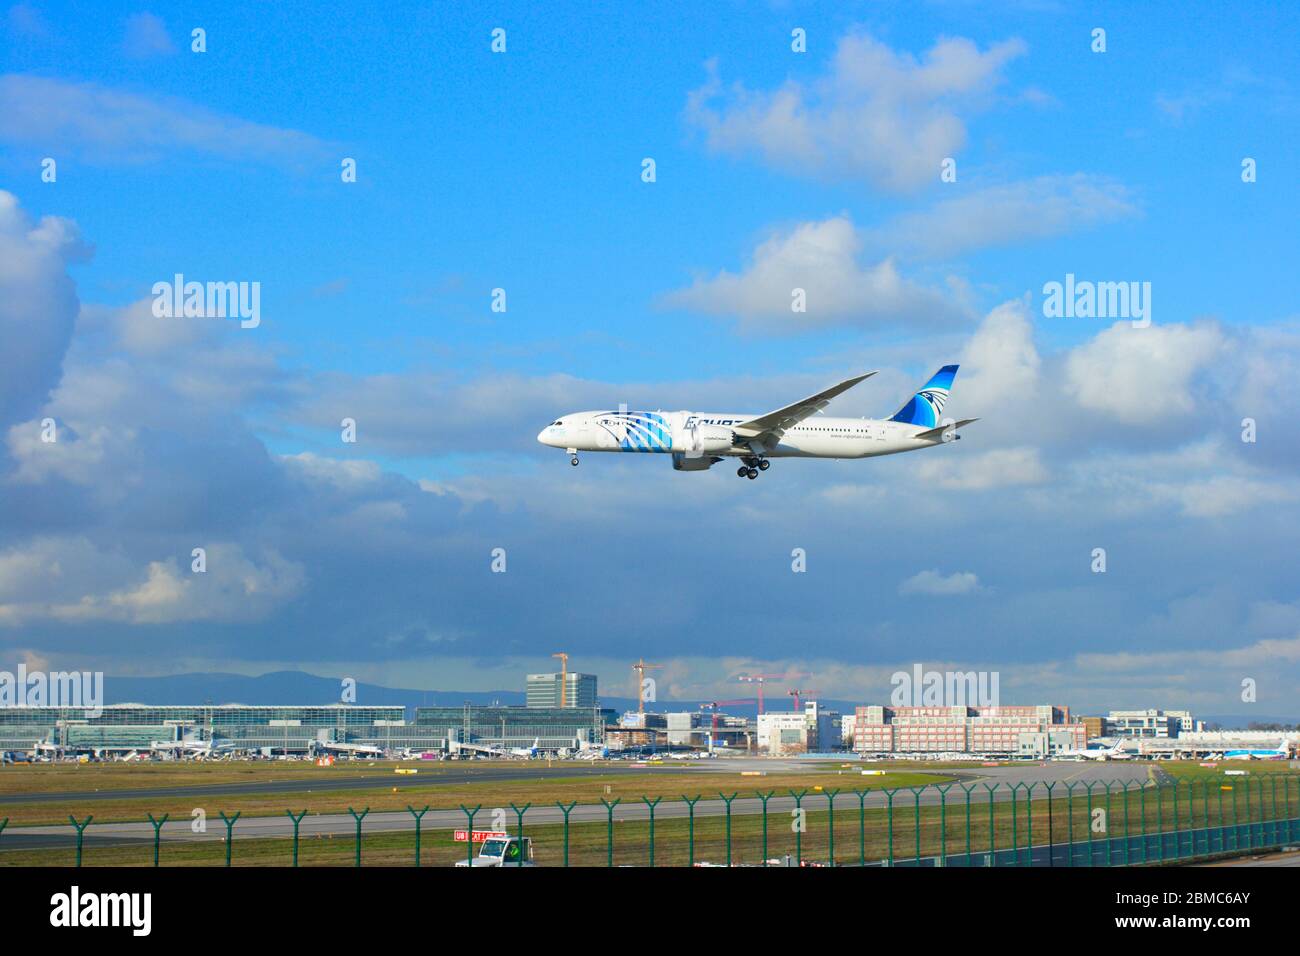 Egyptian airlines flight landing in Frankfurt airport. Germany Stock Photo